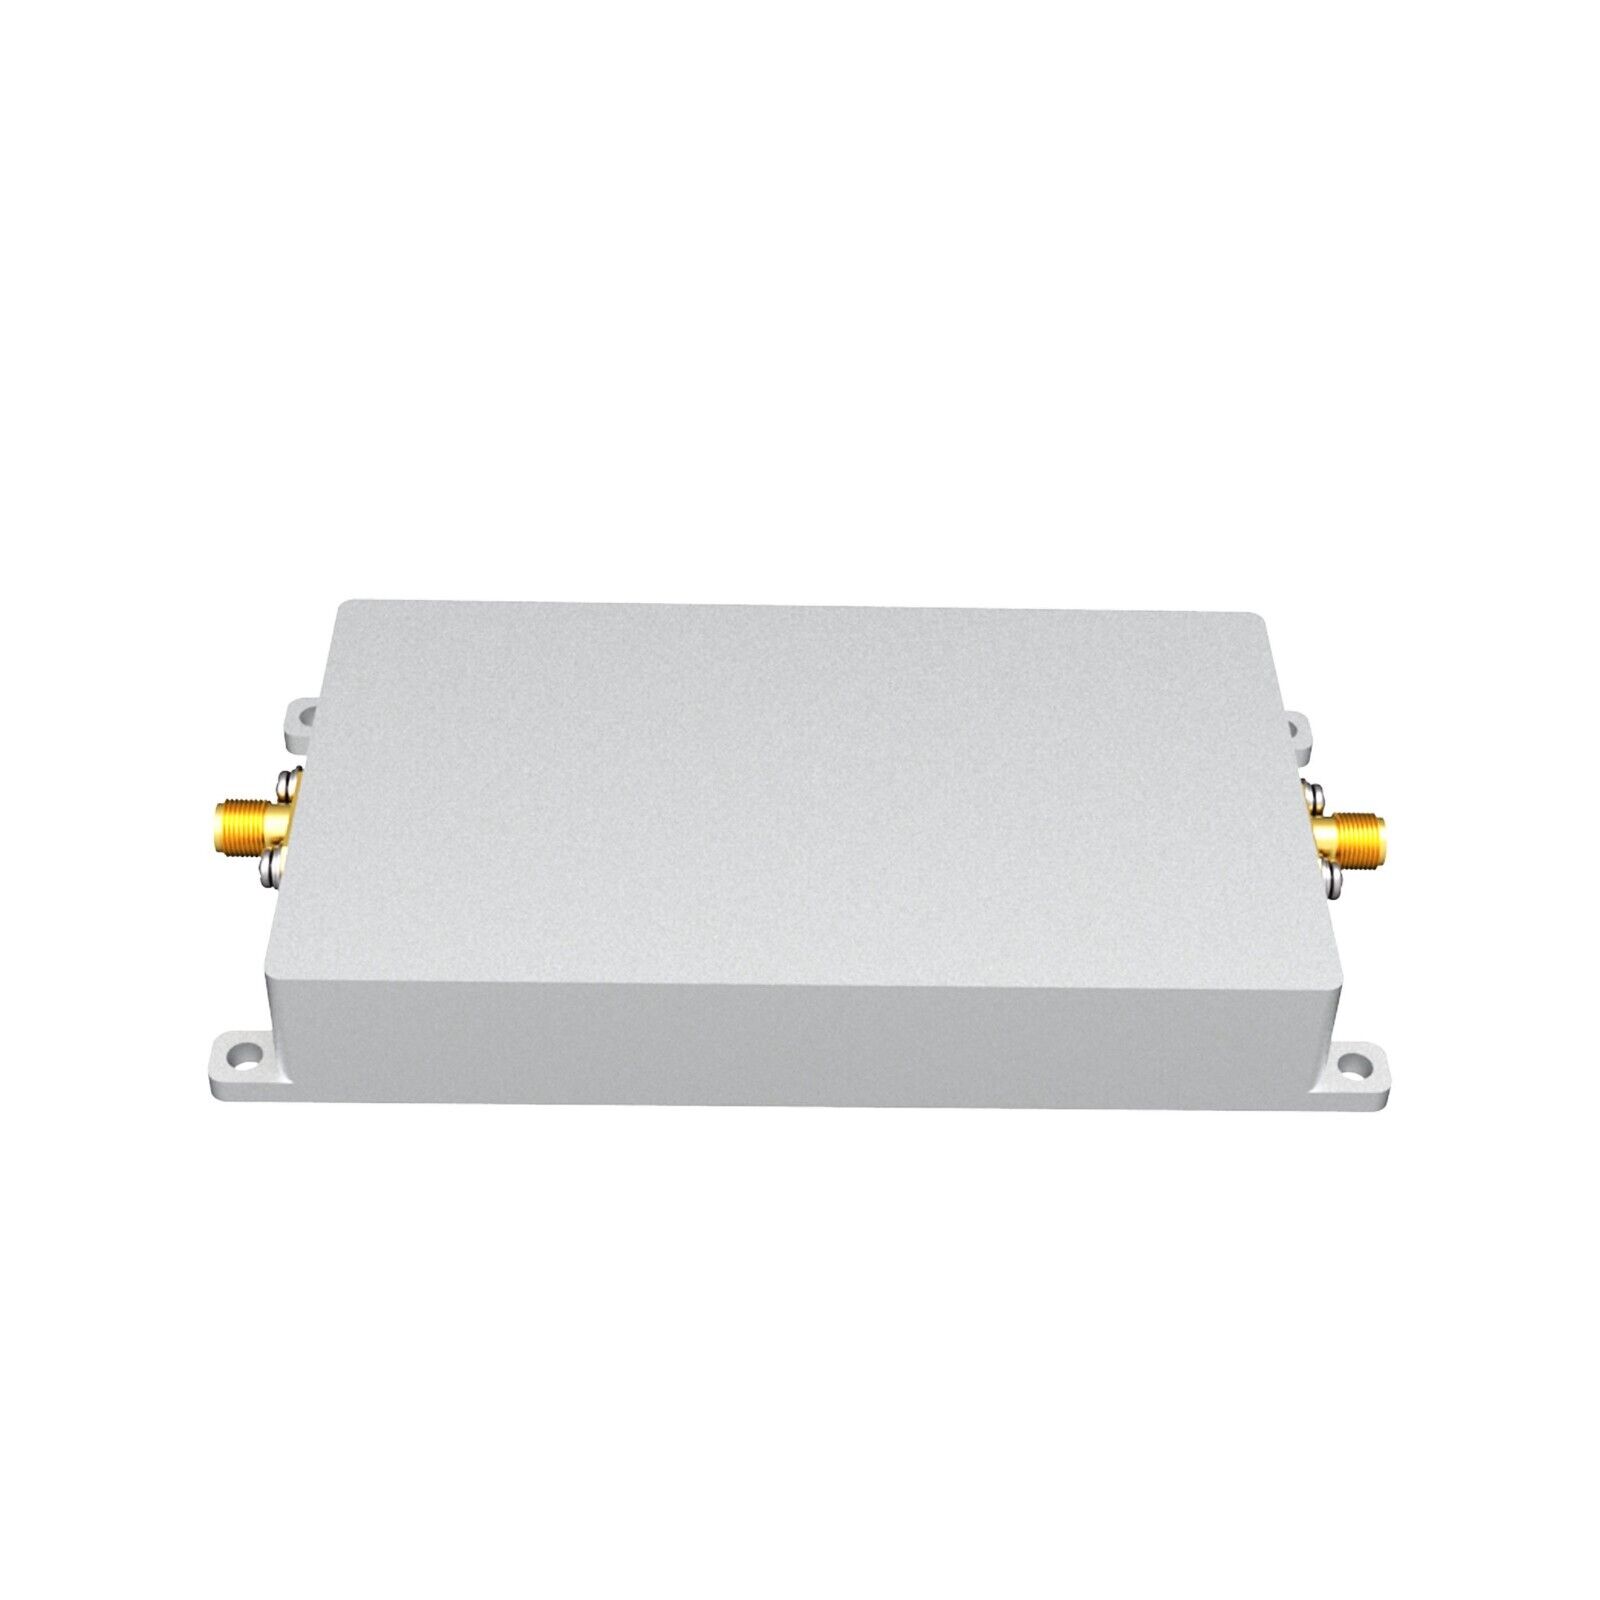 SZHUASHI 2.4GHz 20W 43dBm Signal &WiFI Router Signal Booster Extender Amplifier